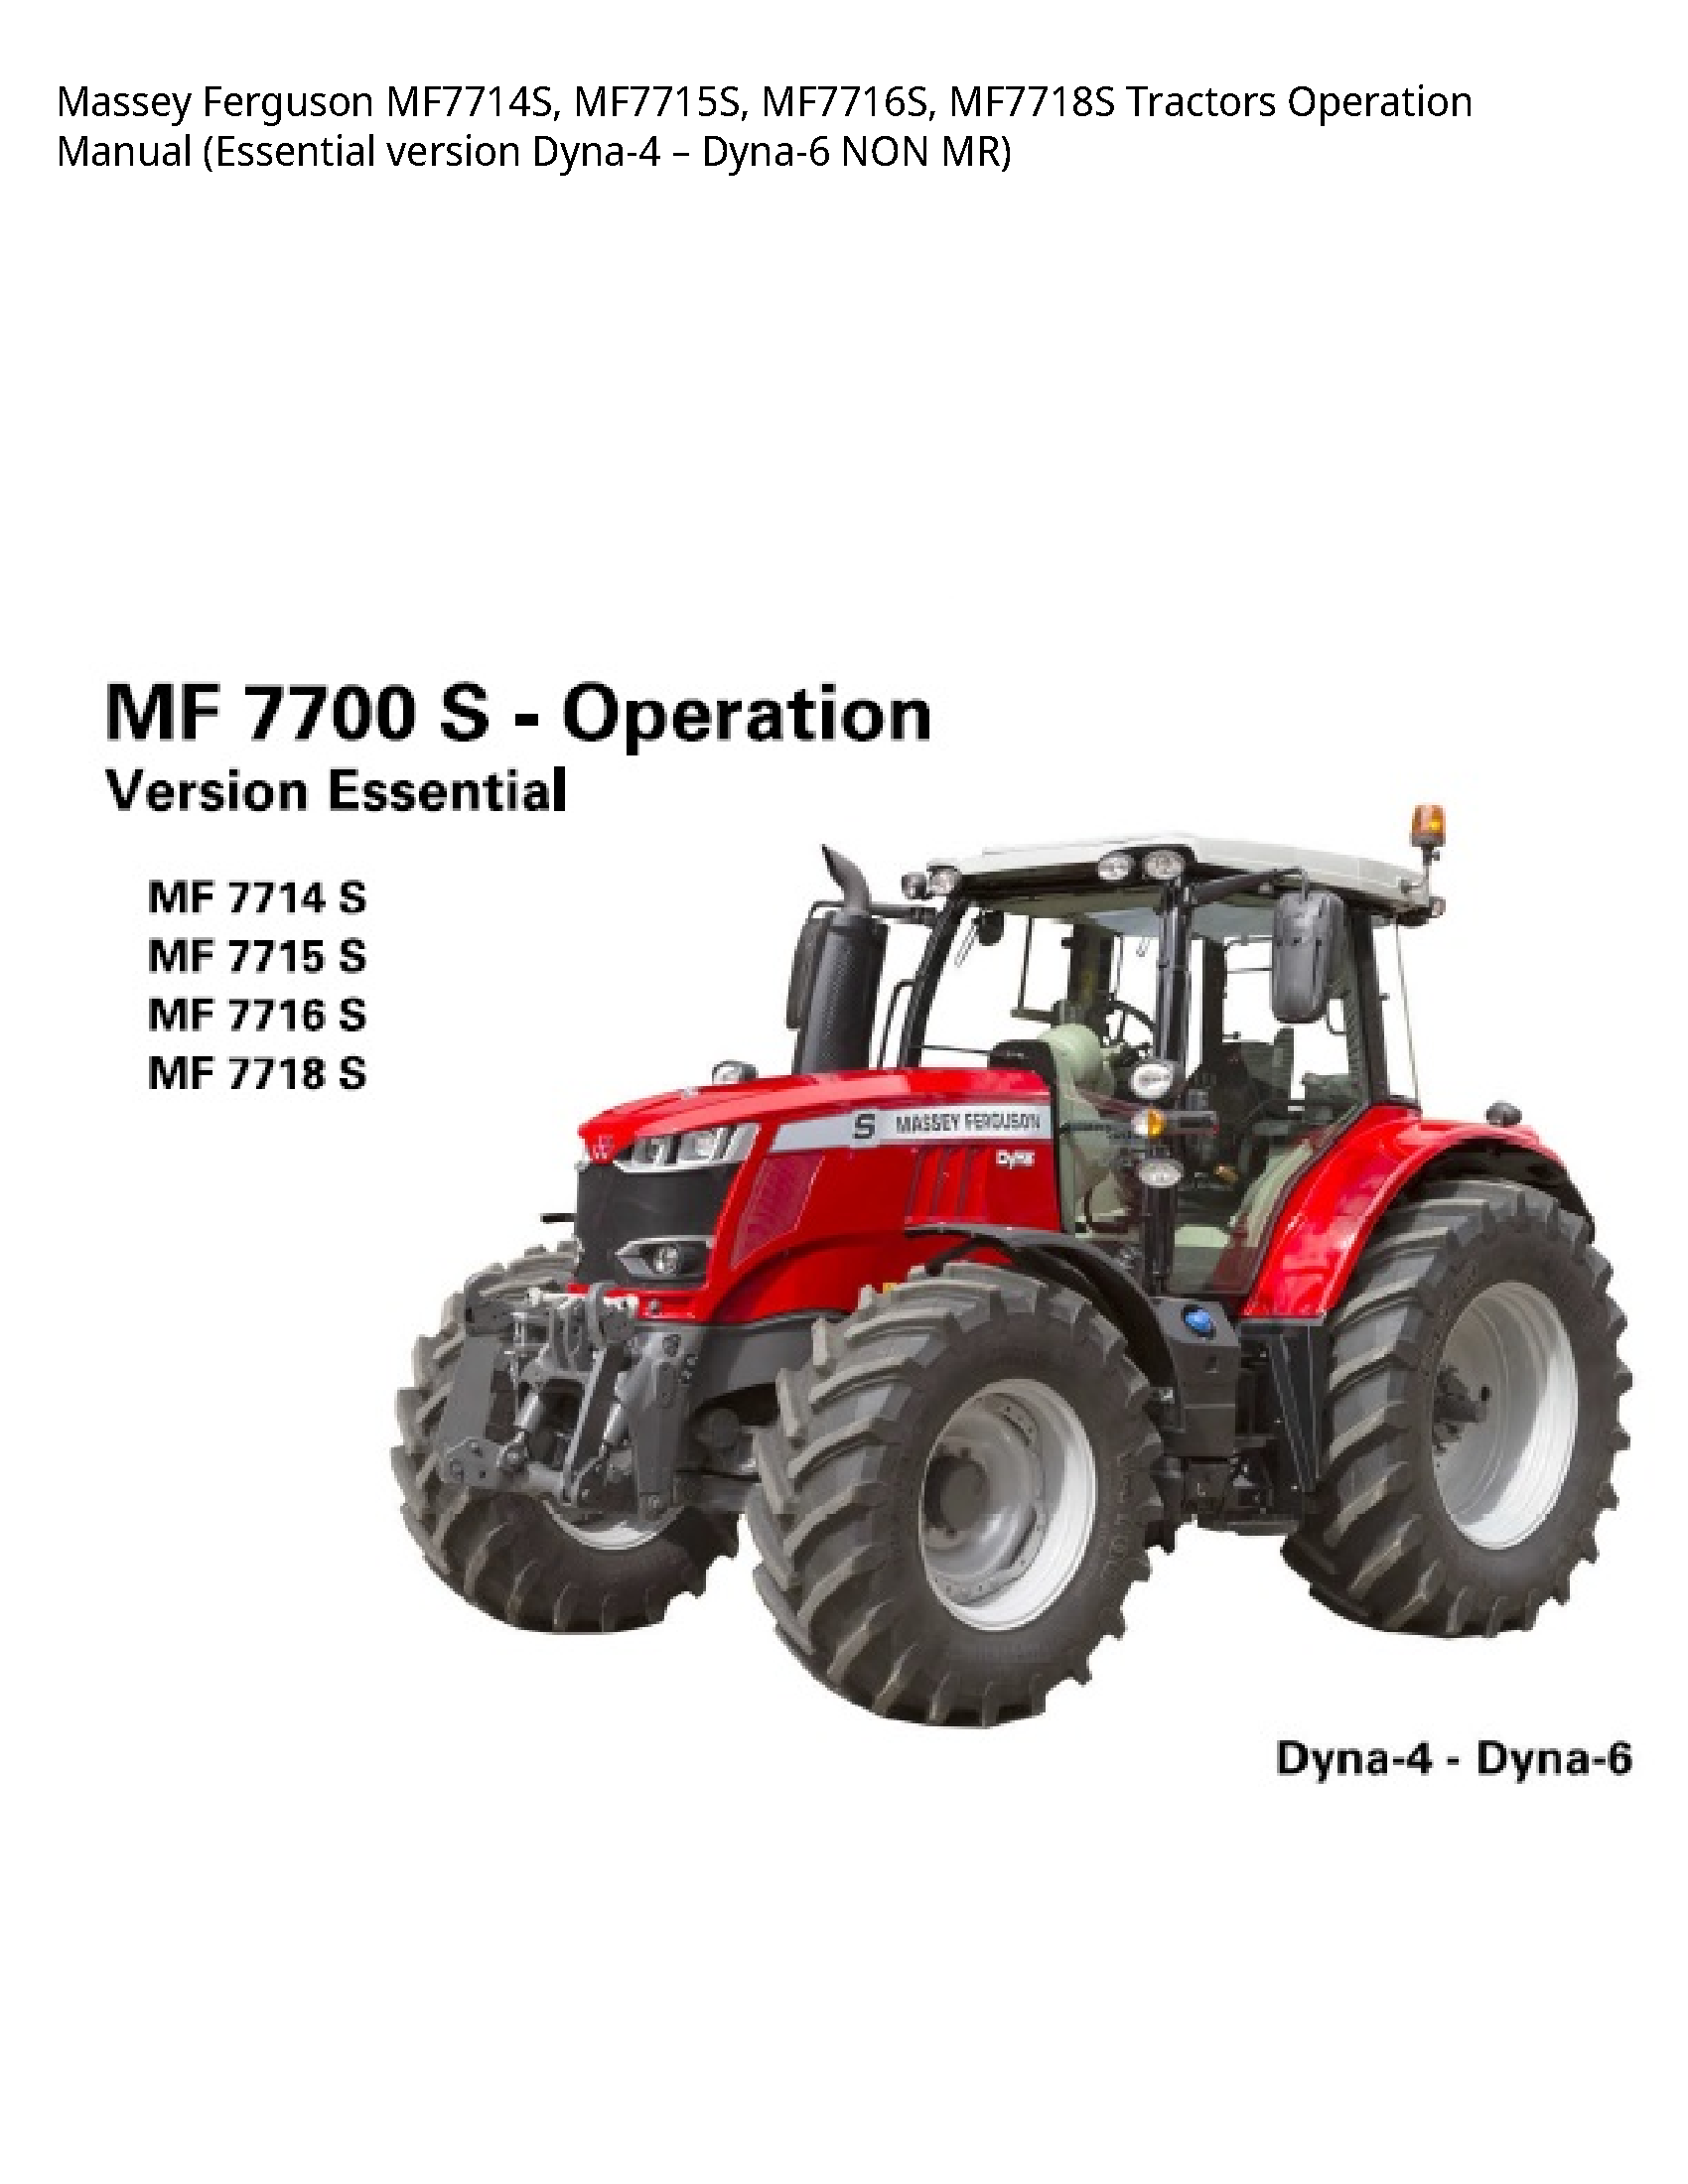 Massey Ferguson MF7714S Tractors Operation manual